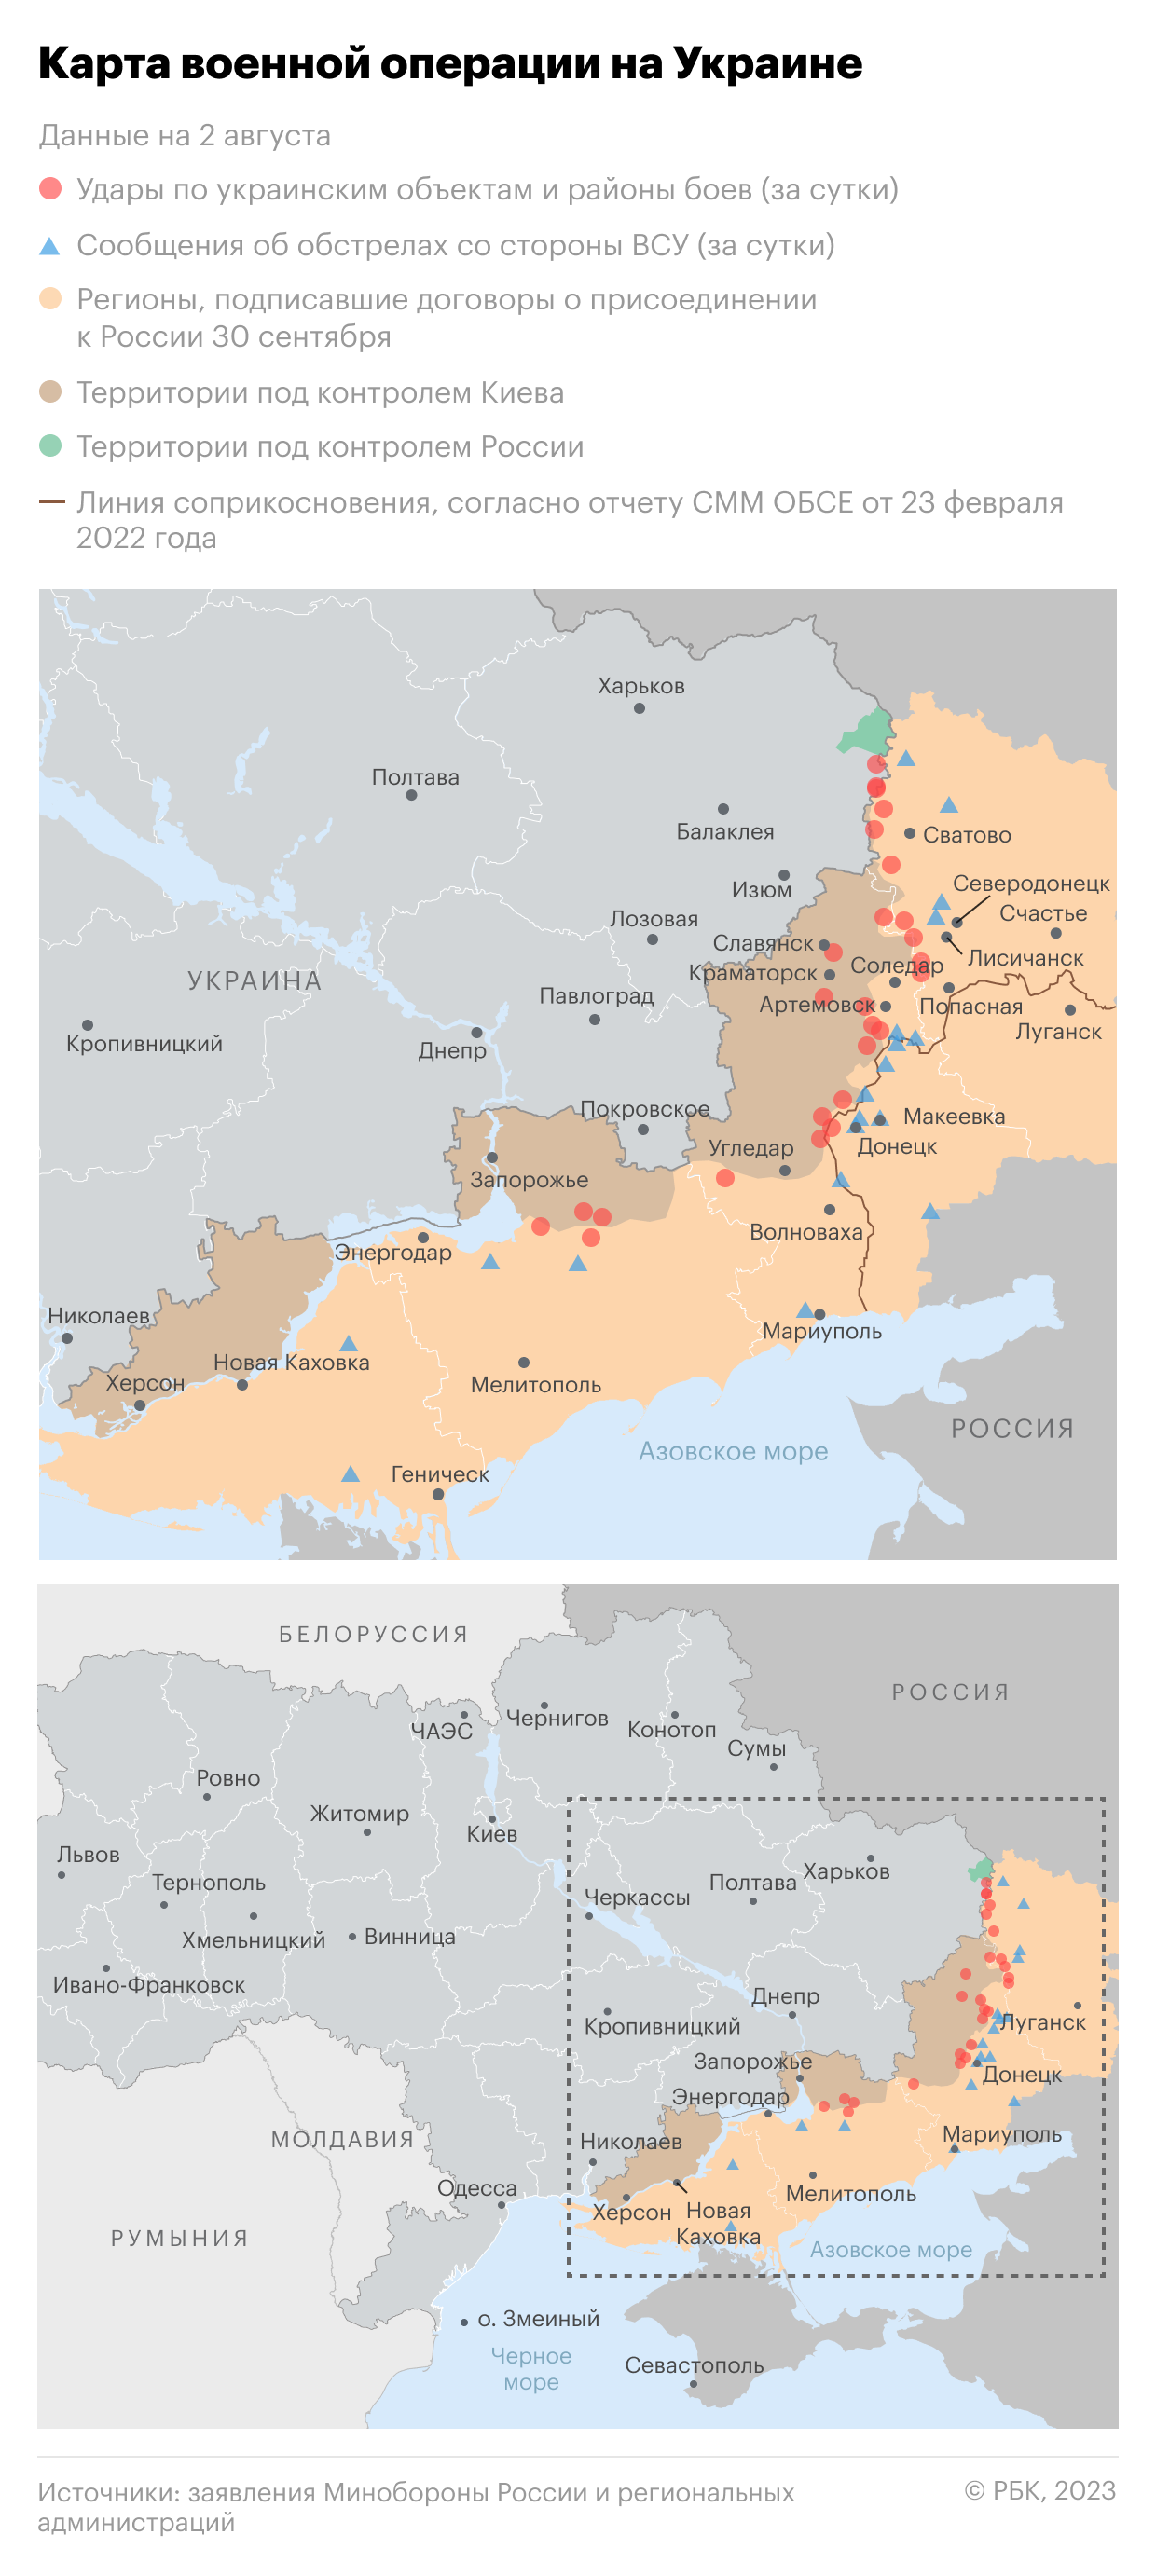 Военная операция на Украине. Карта на 2 августа"/>













